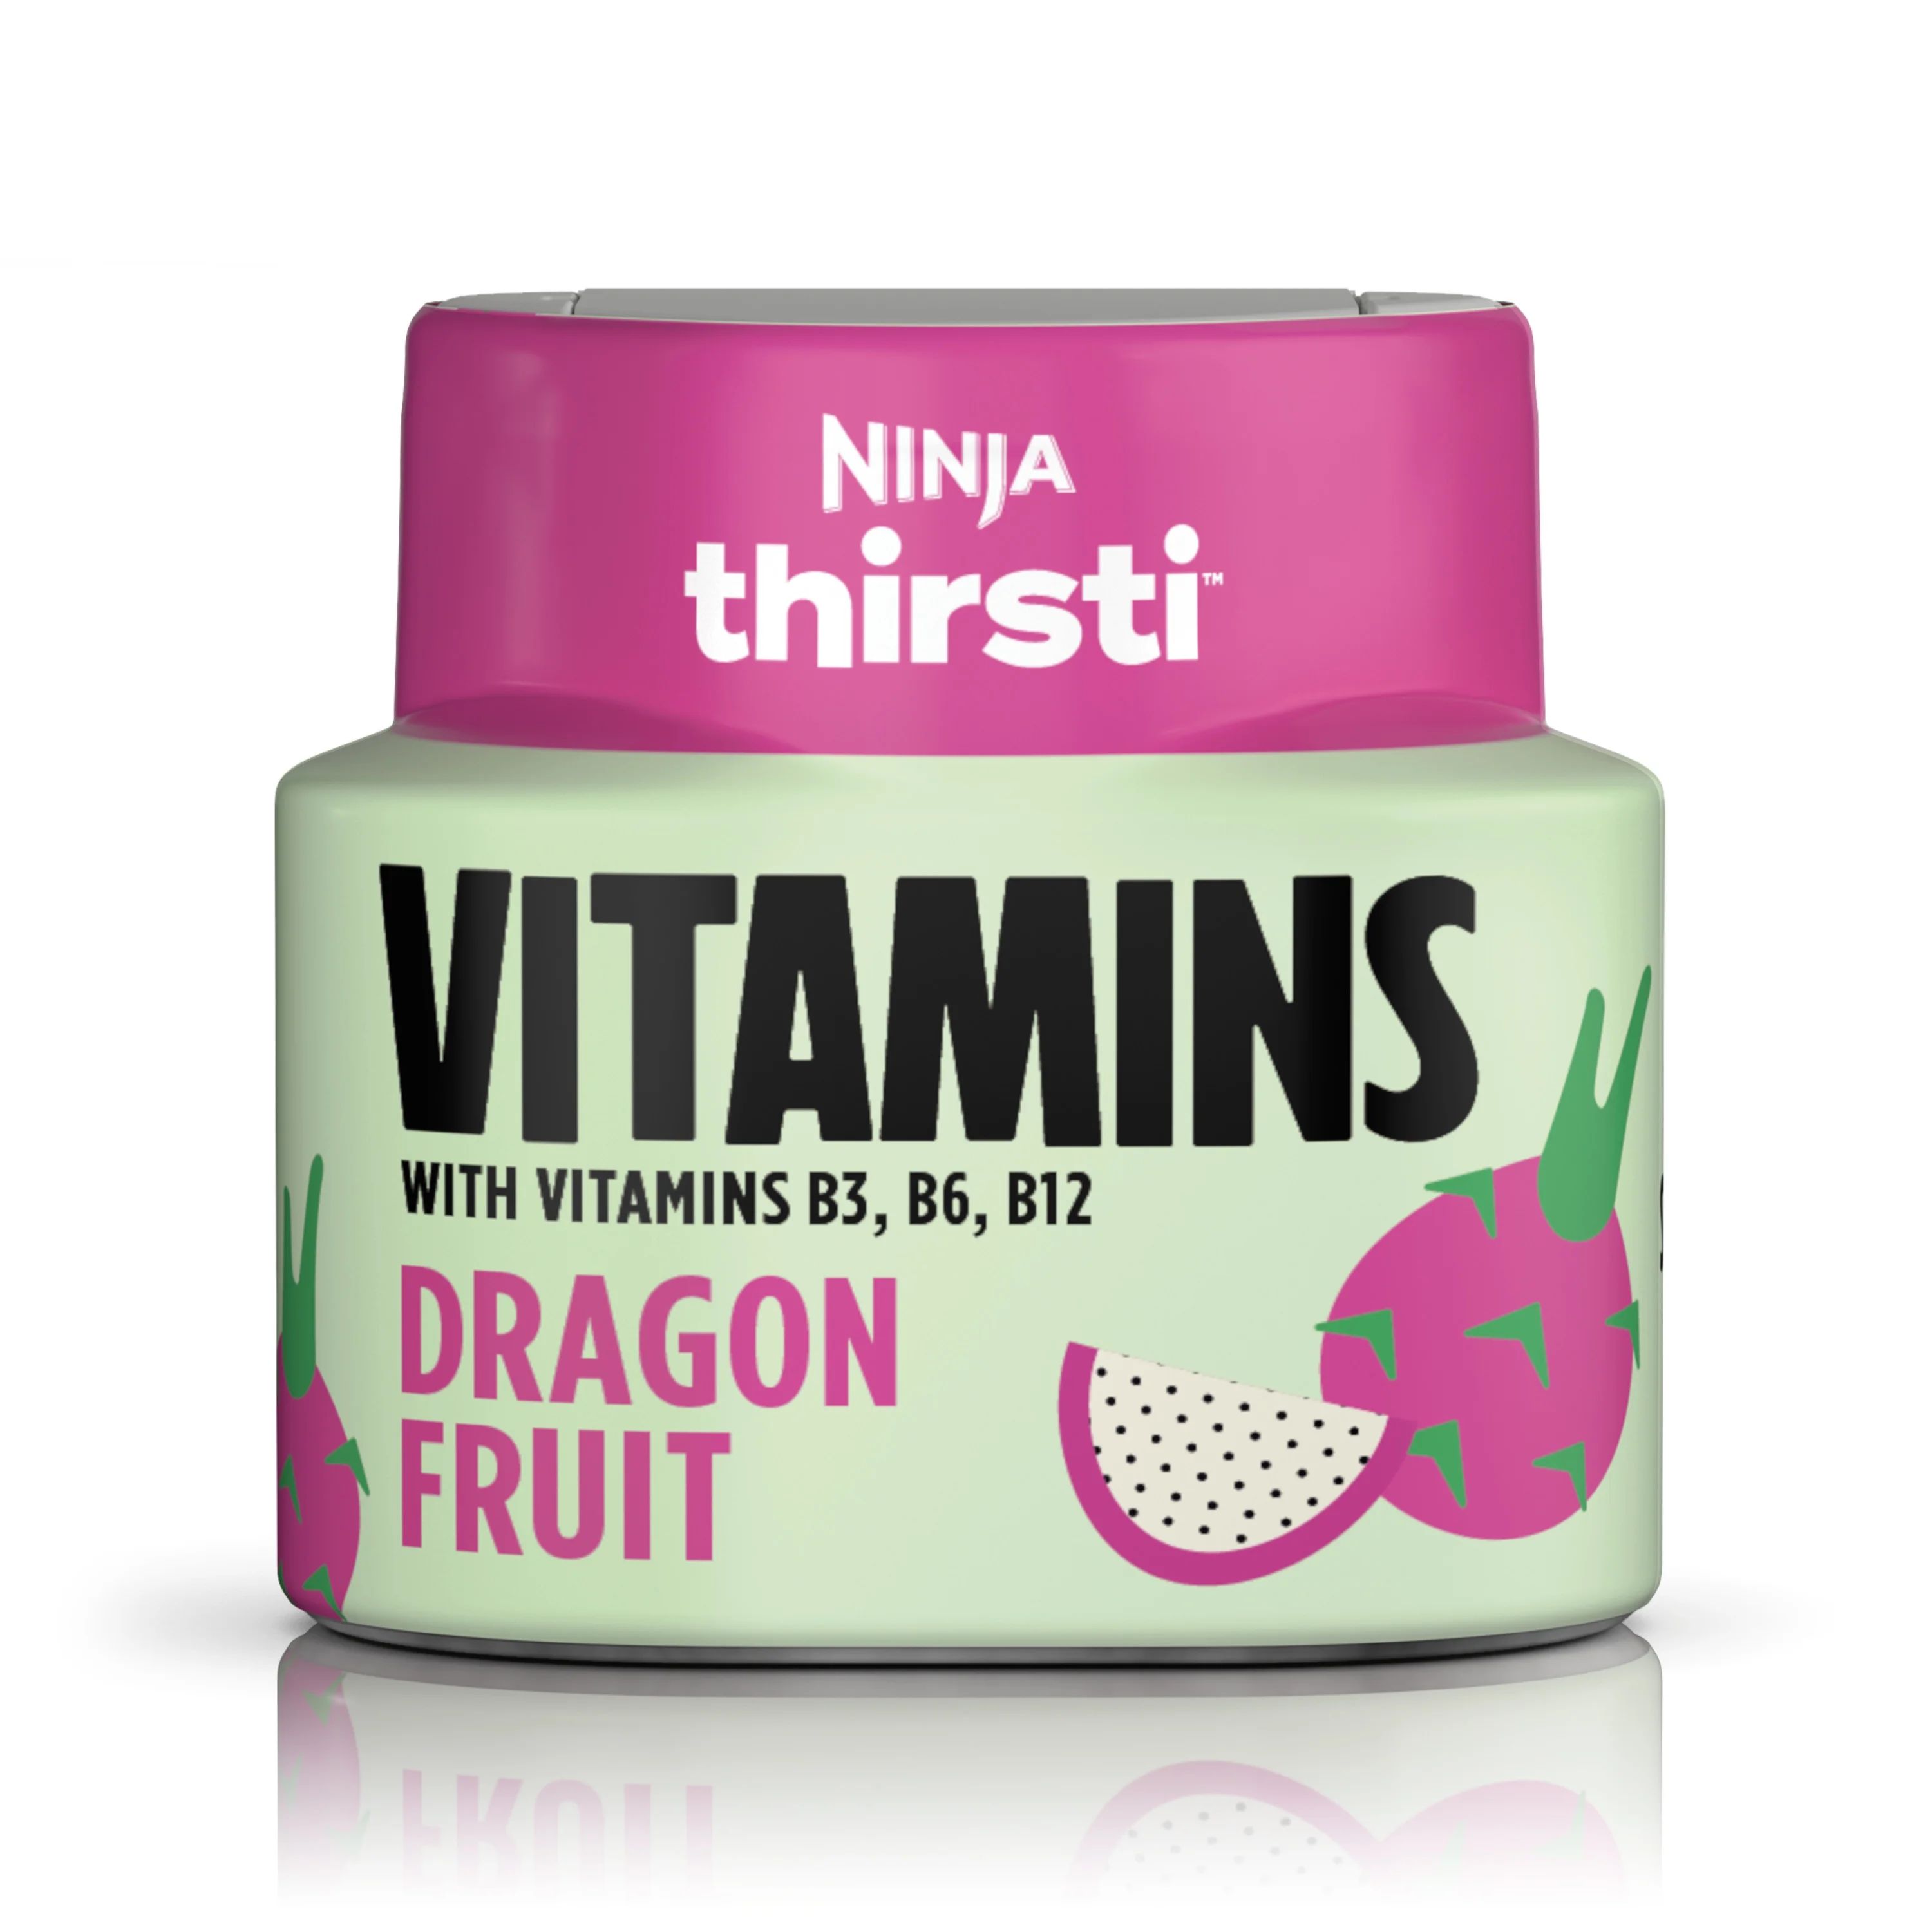 Ninja Thirsti VITAMINS Dragon Fruit Flavored Water Drops, WCFDGFT6 | Walmart (US)